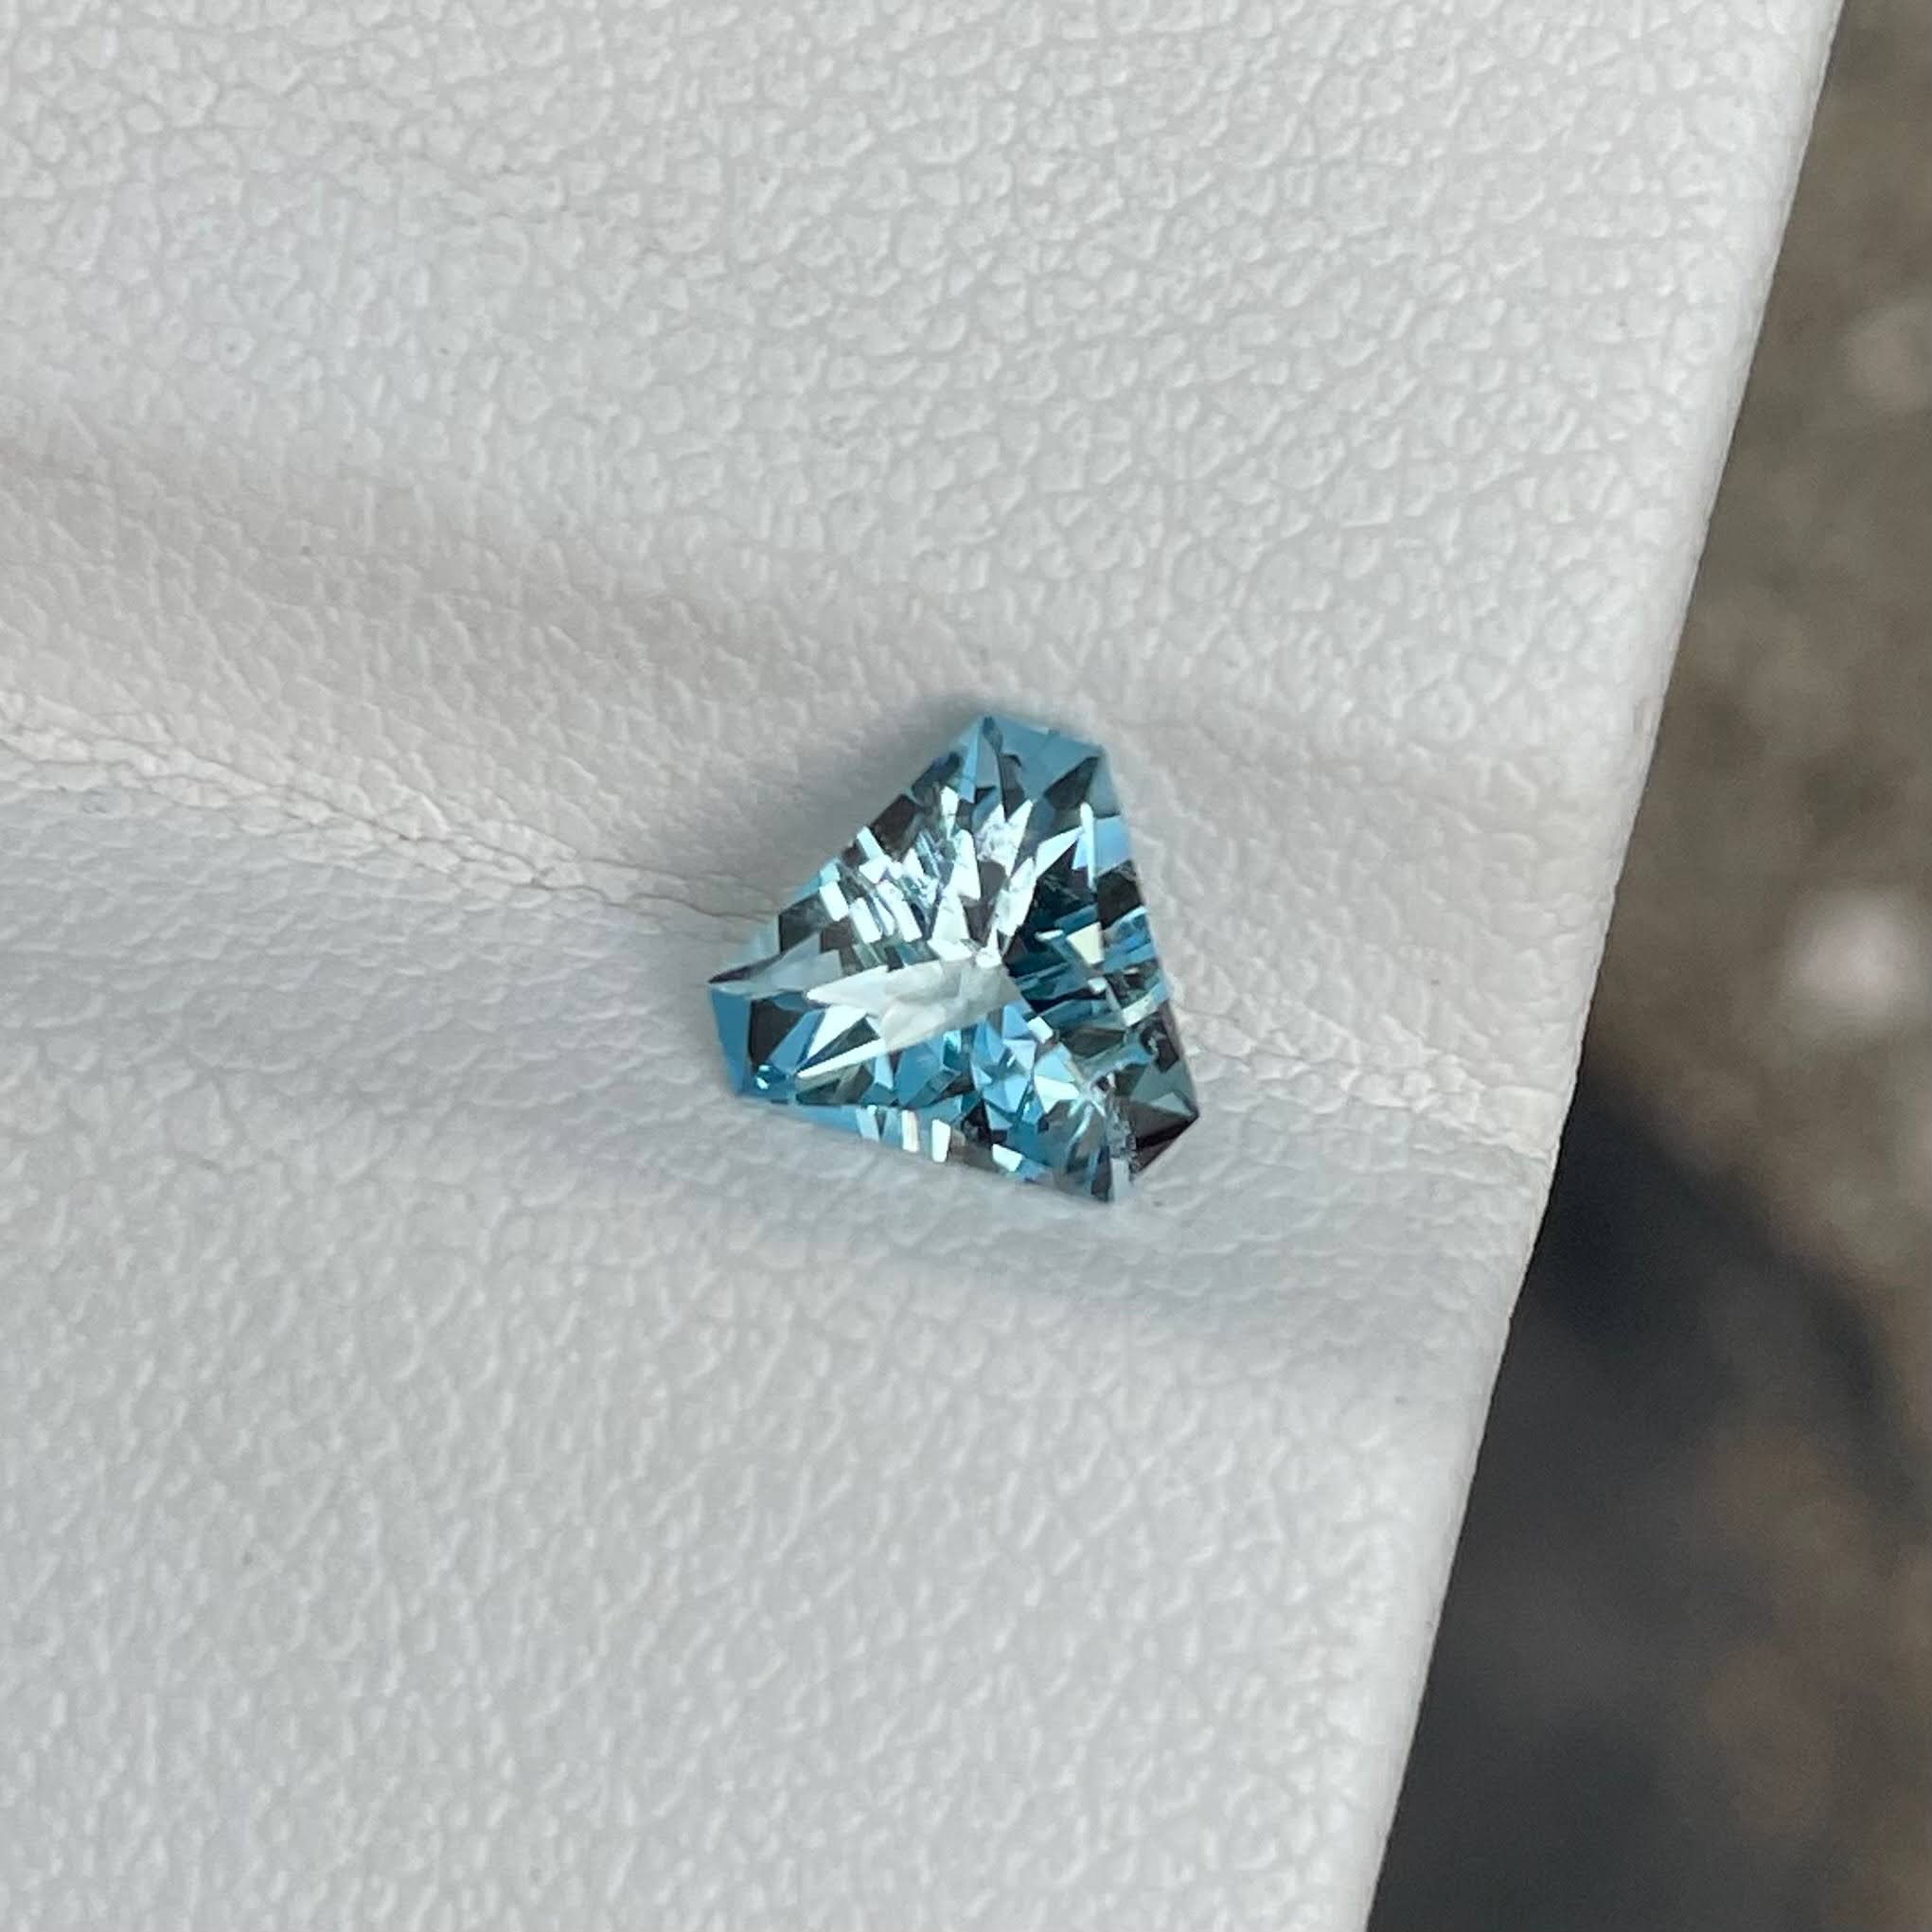 0.90 Carats Blue Aquamarine Stone